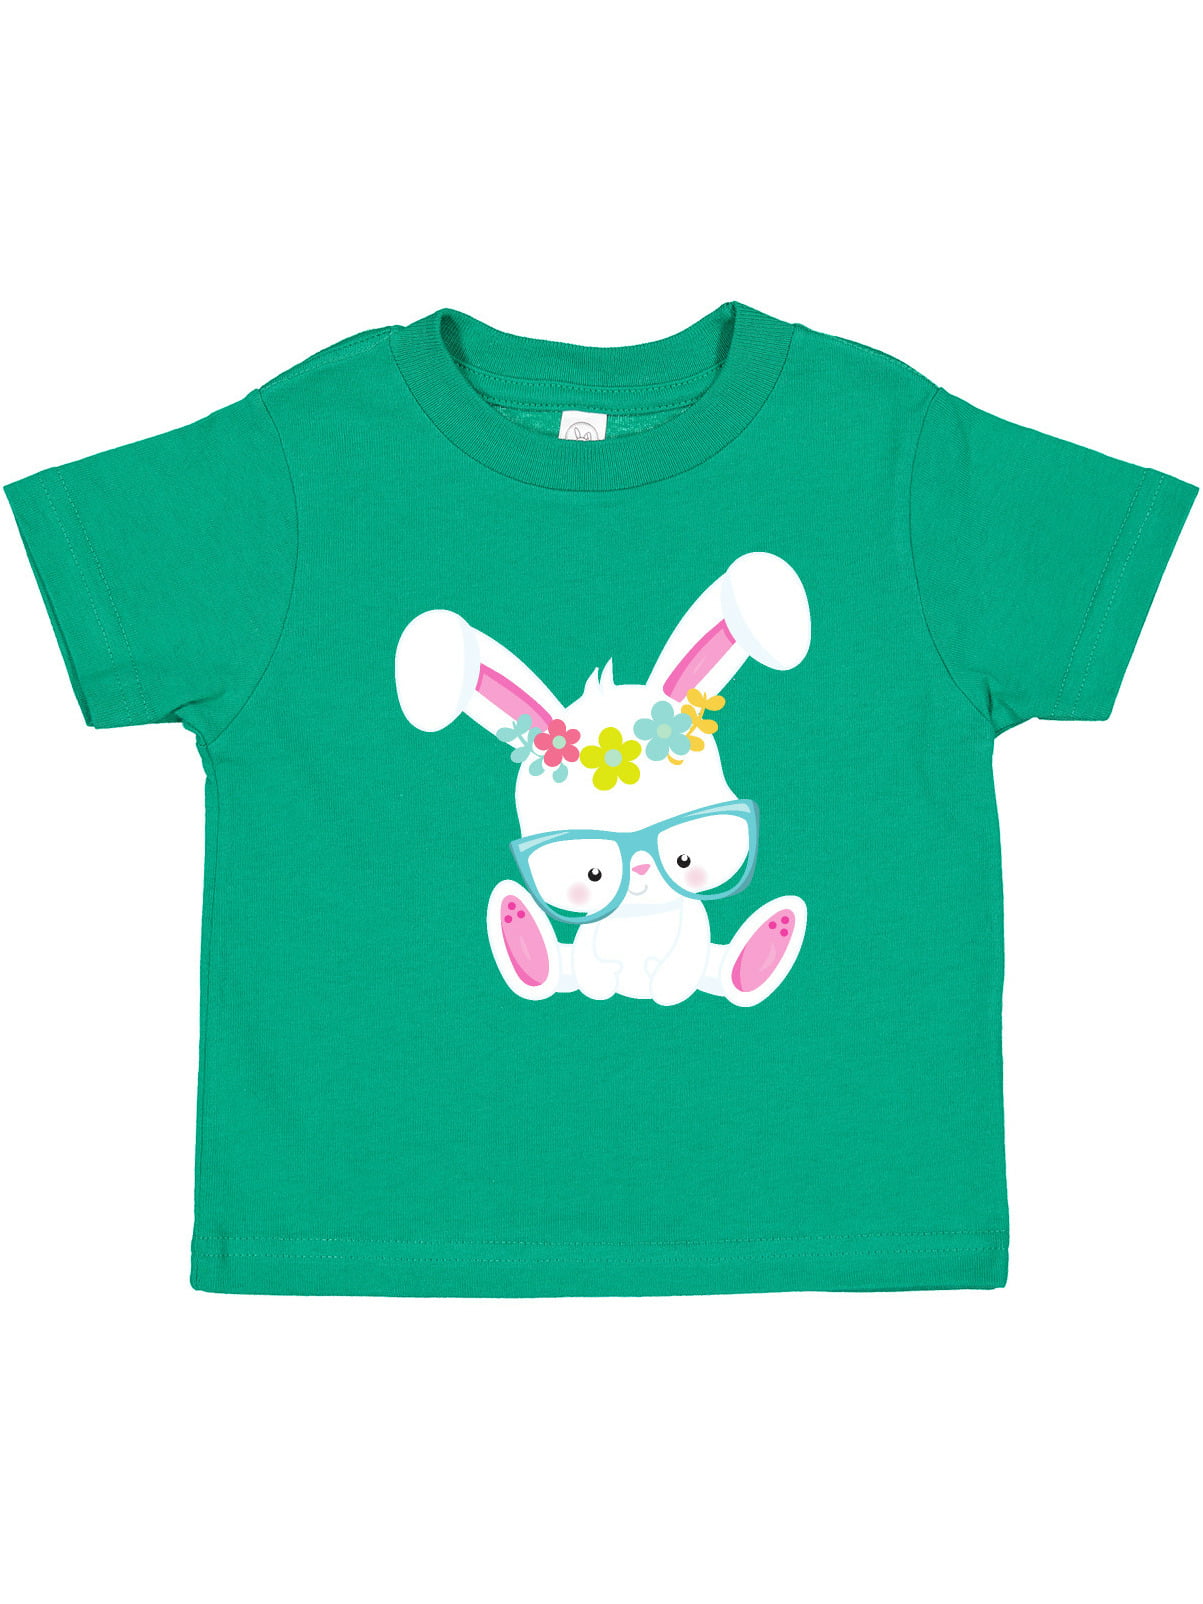 Hipster rabbit baby shirt